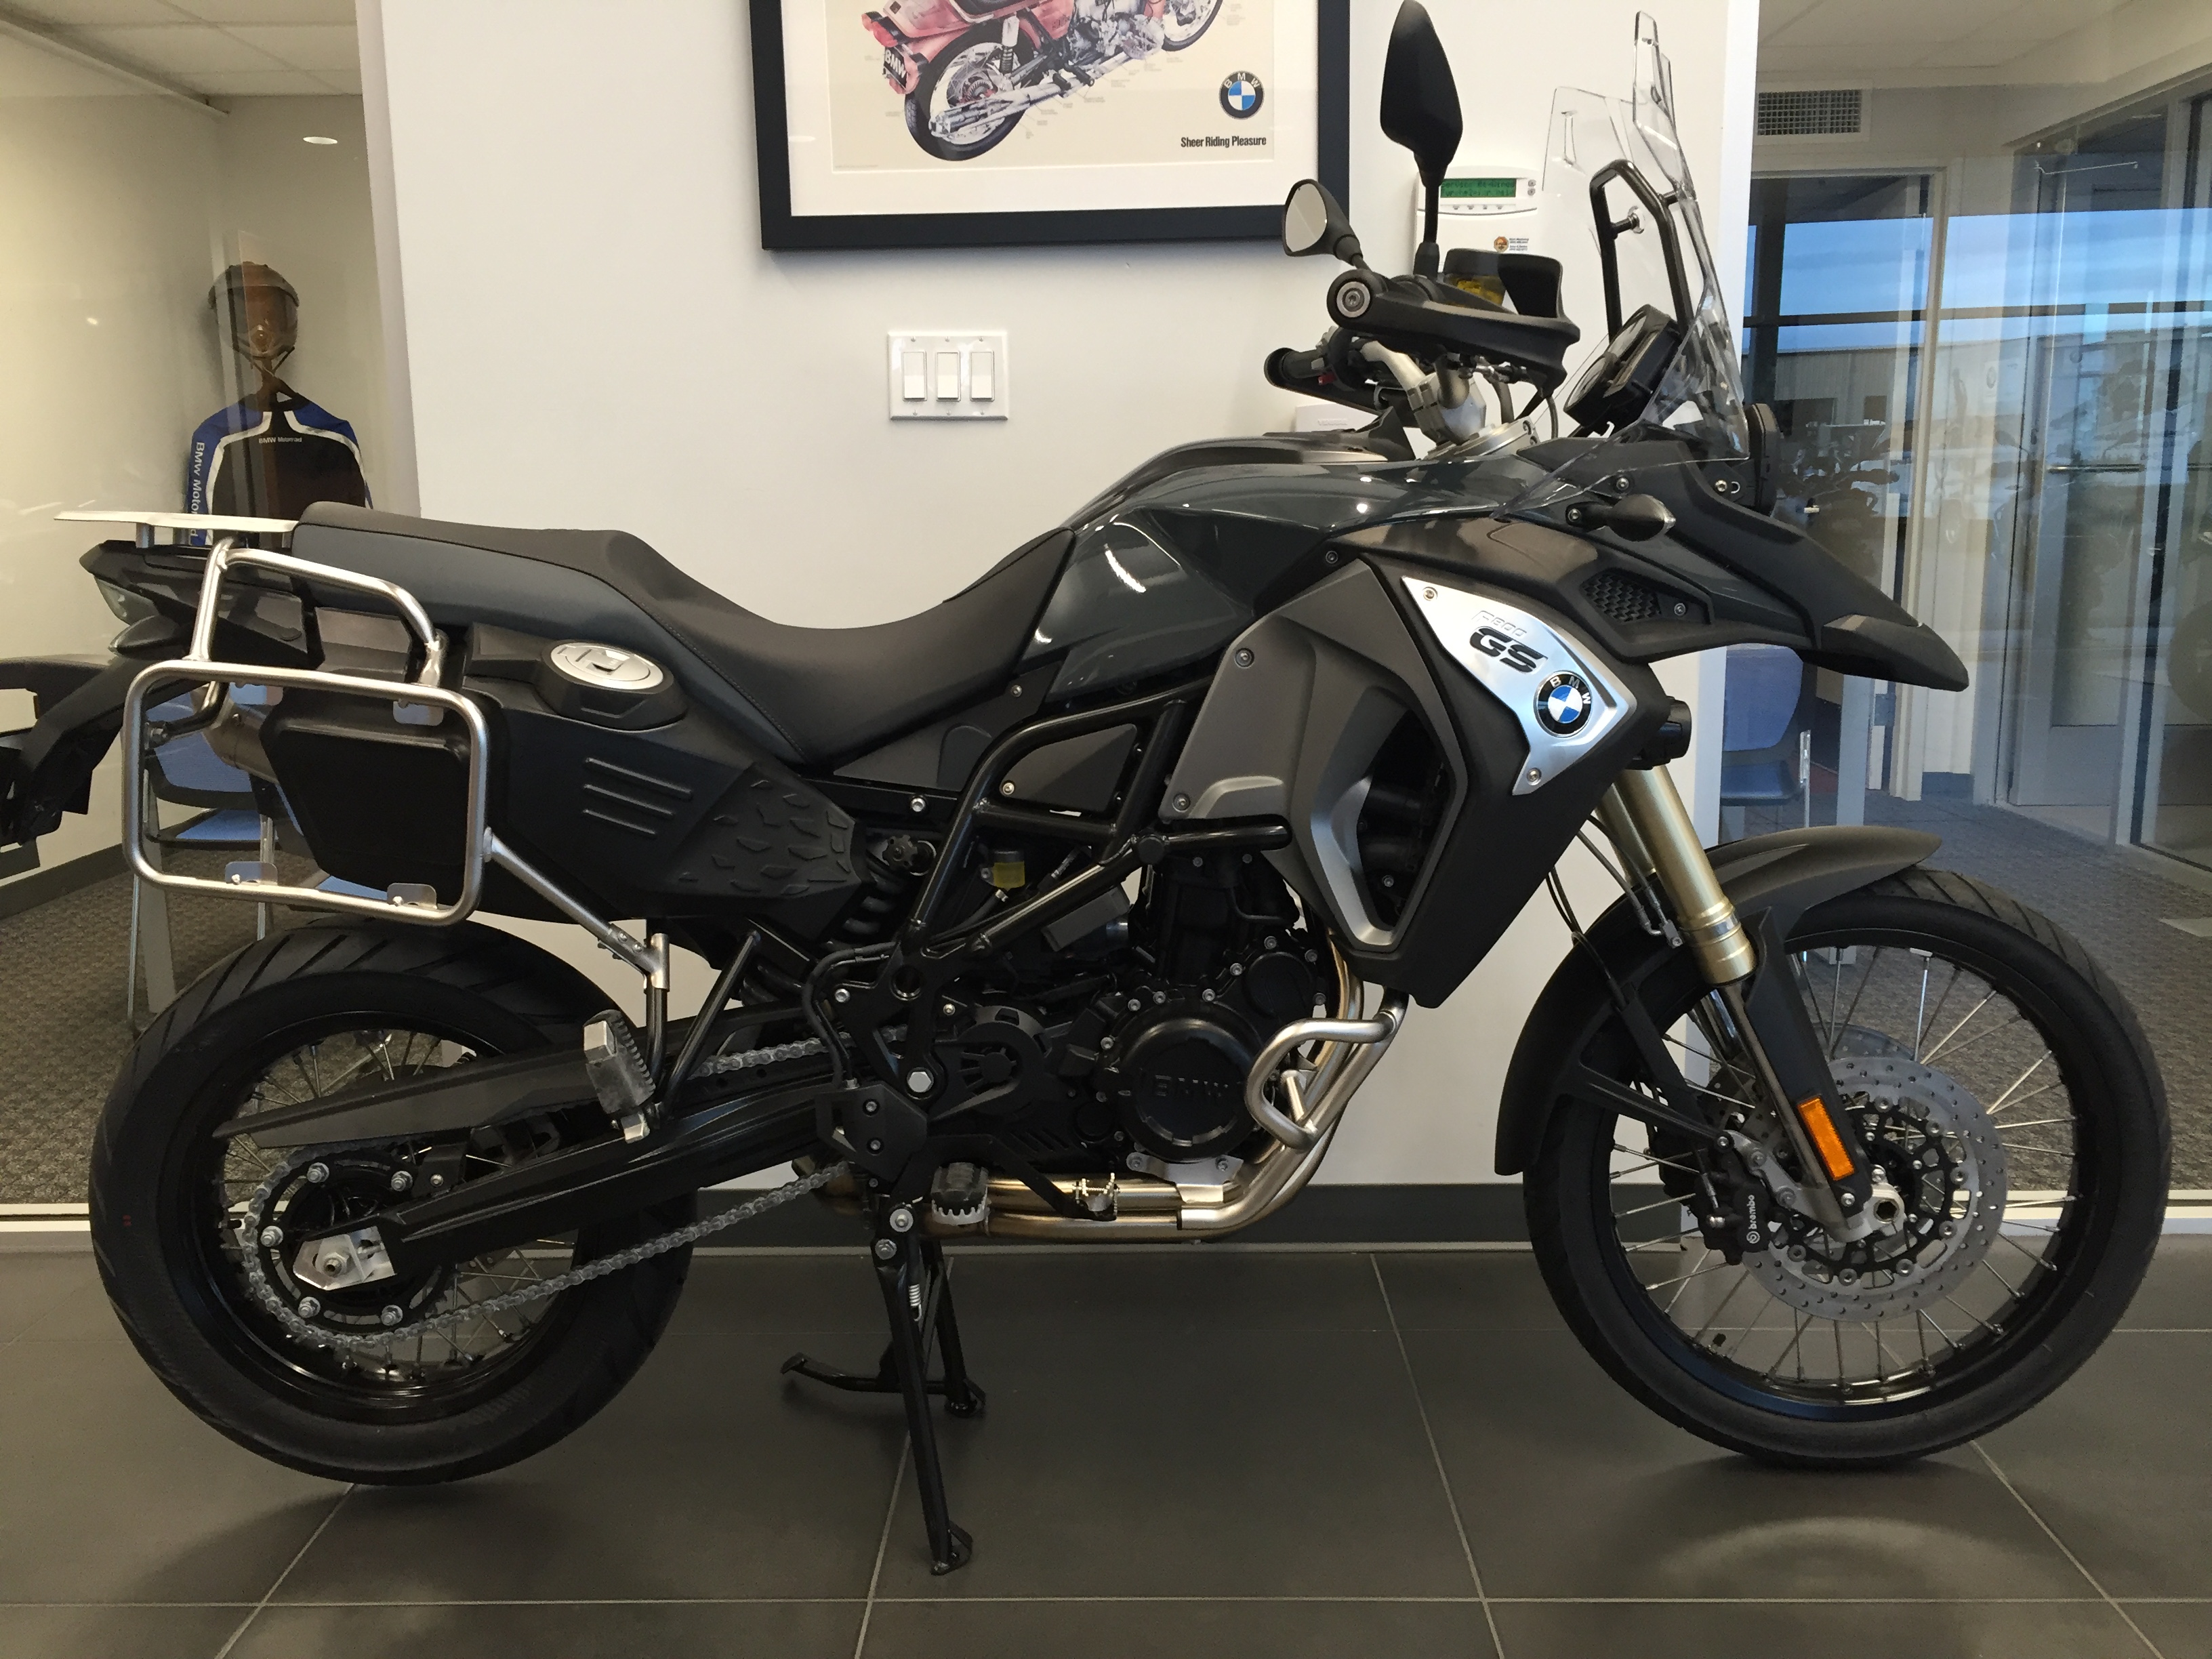 New BMW Motorcycles - F800GSA | Santa Fe BMW Motorcycles | Santa Fe, NM